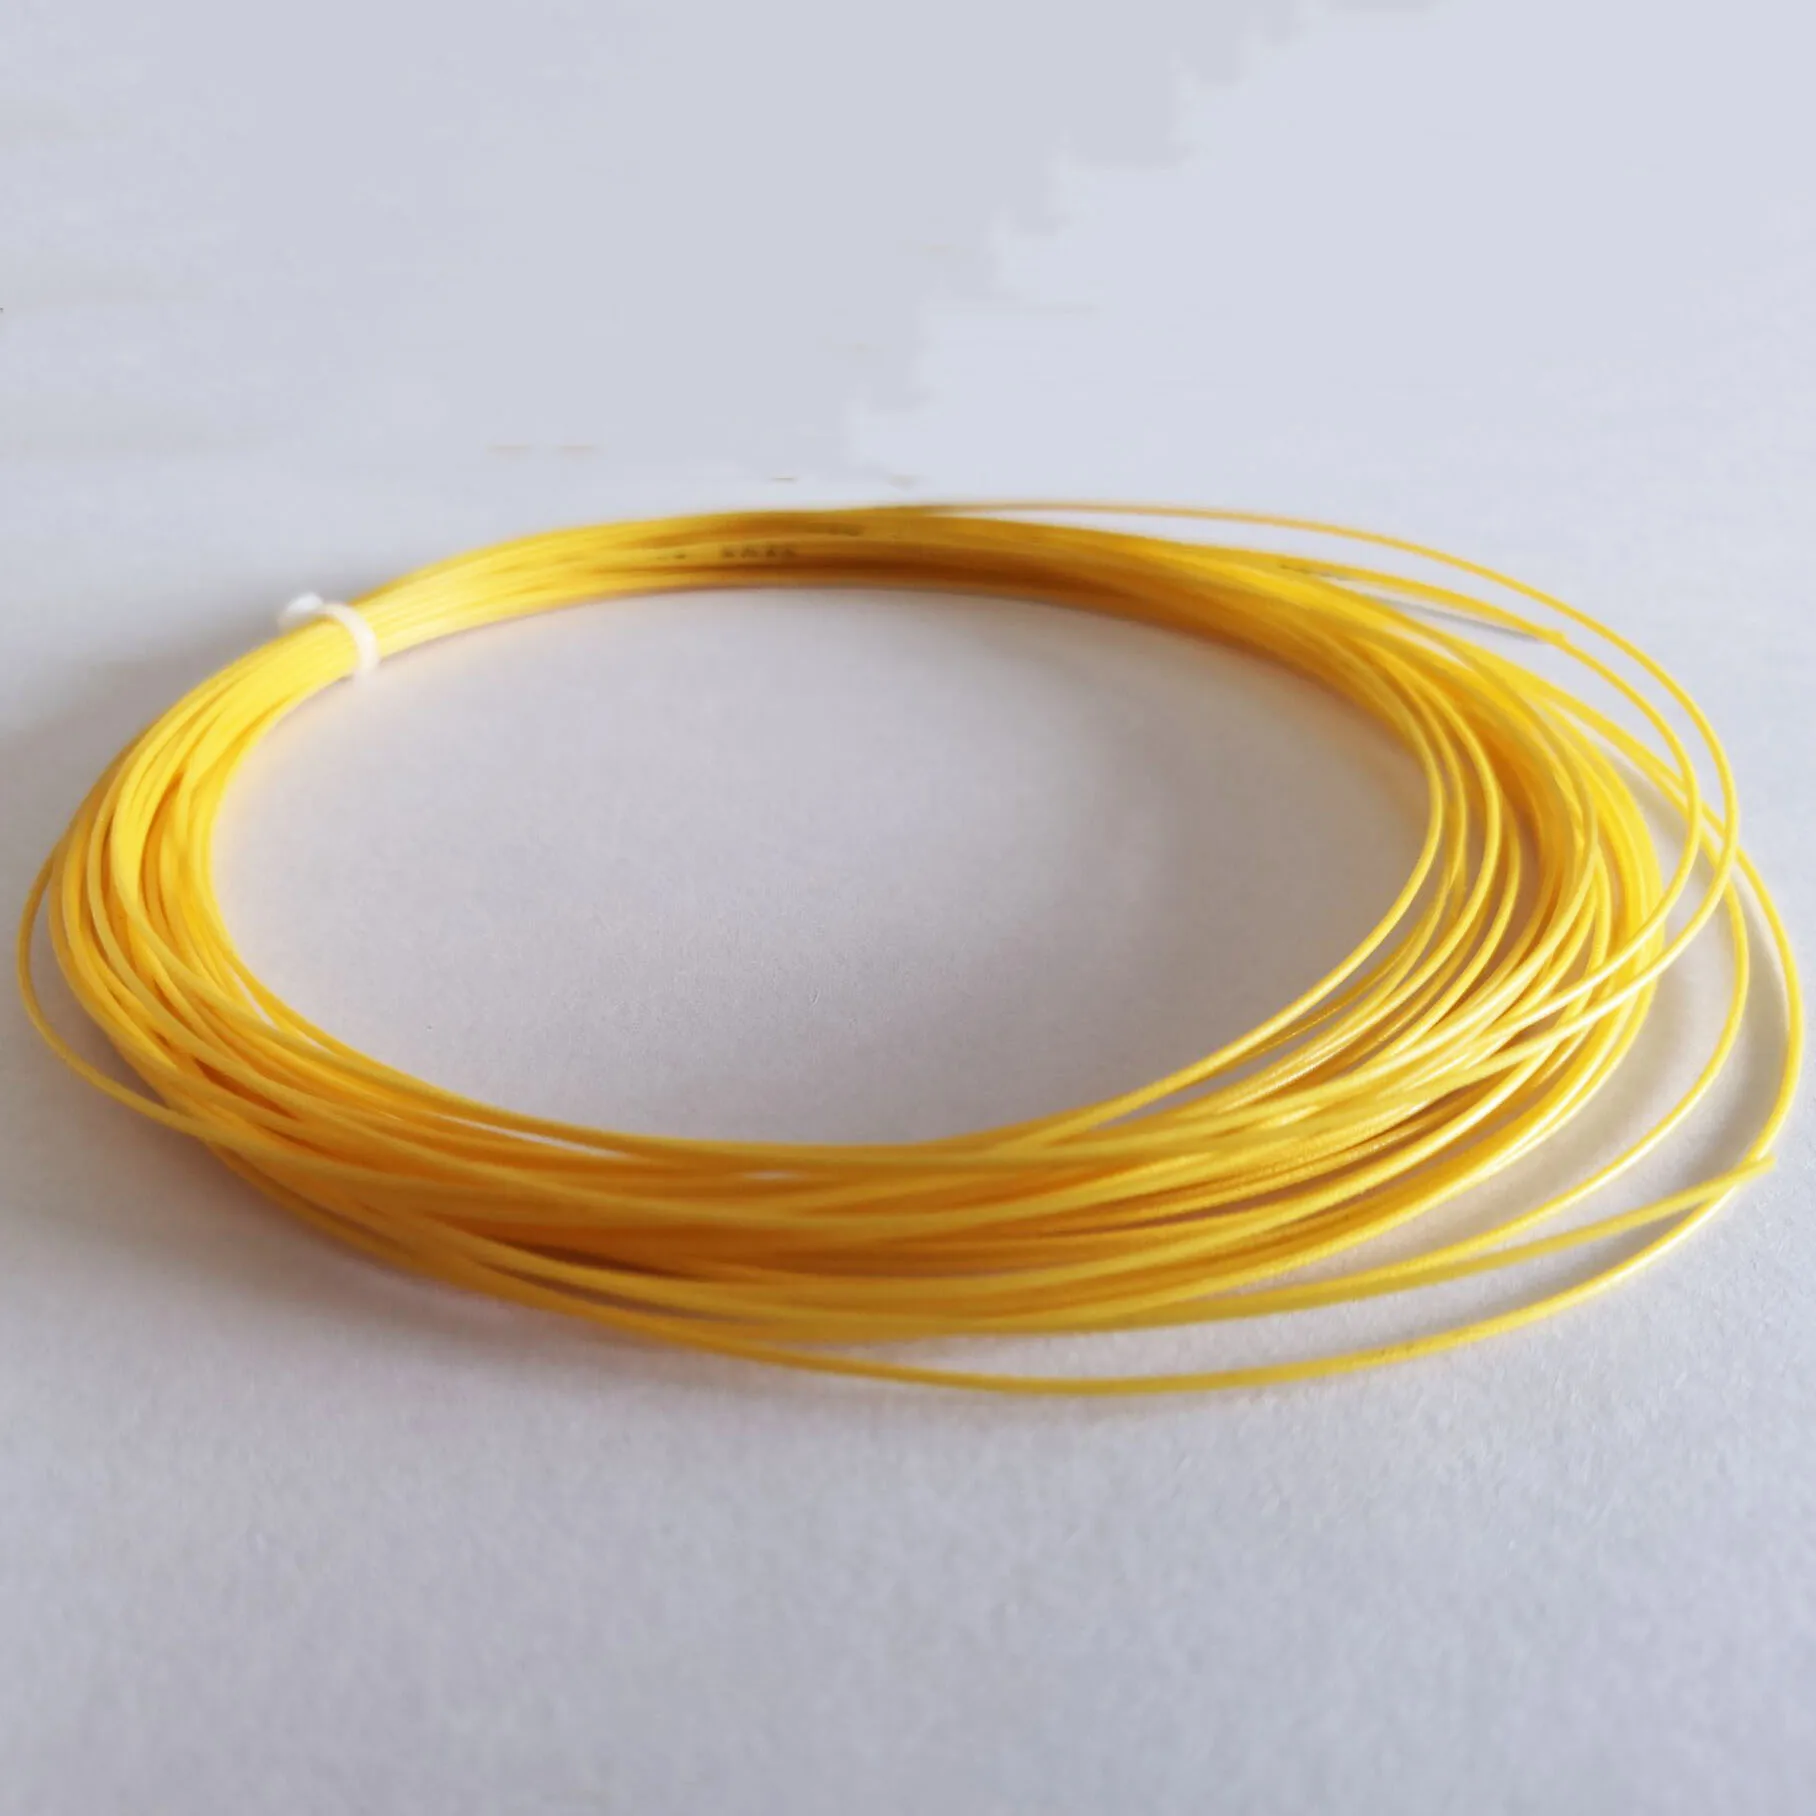 

Factory badminton string 10m durable brand quality badminton machine string in bulk, 10 colors